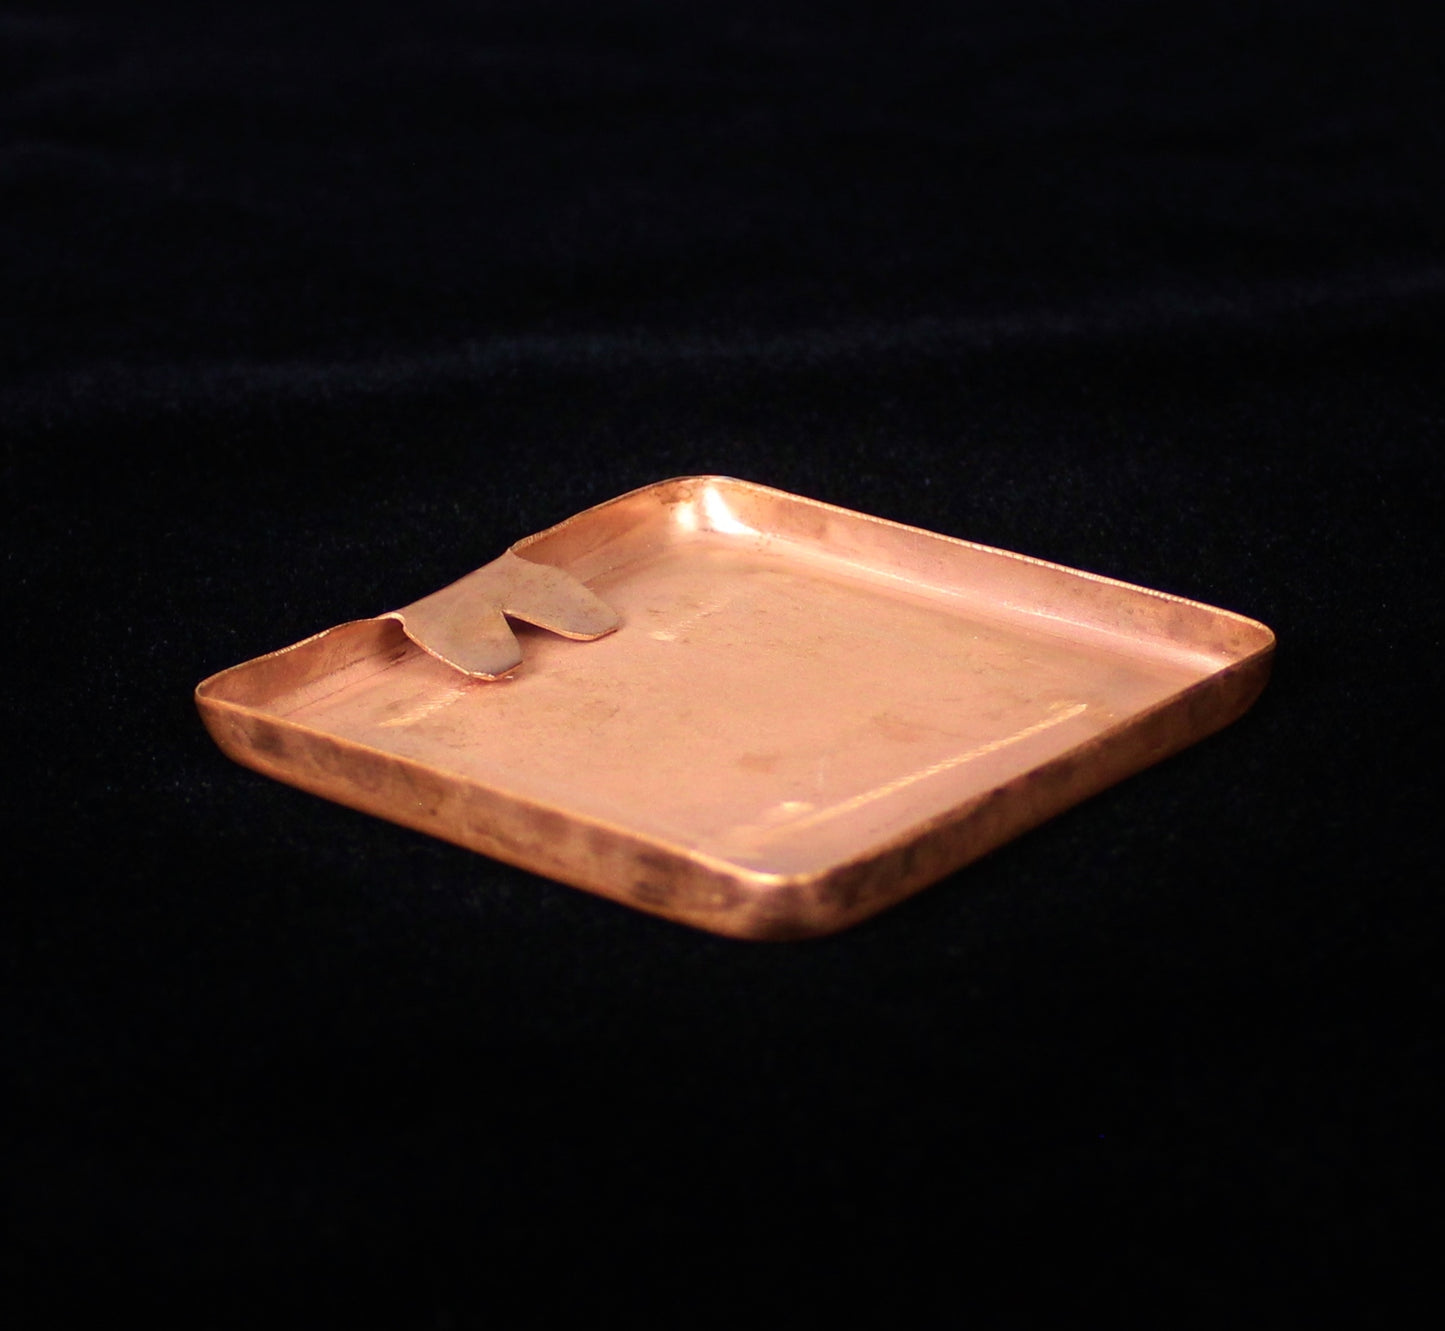 Pinecone Copper Tile, 3" x 3" x 1/4"